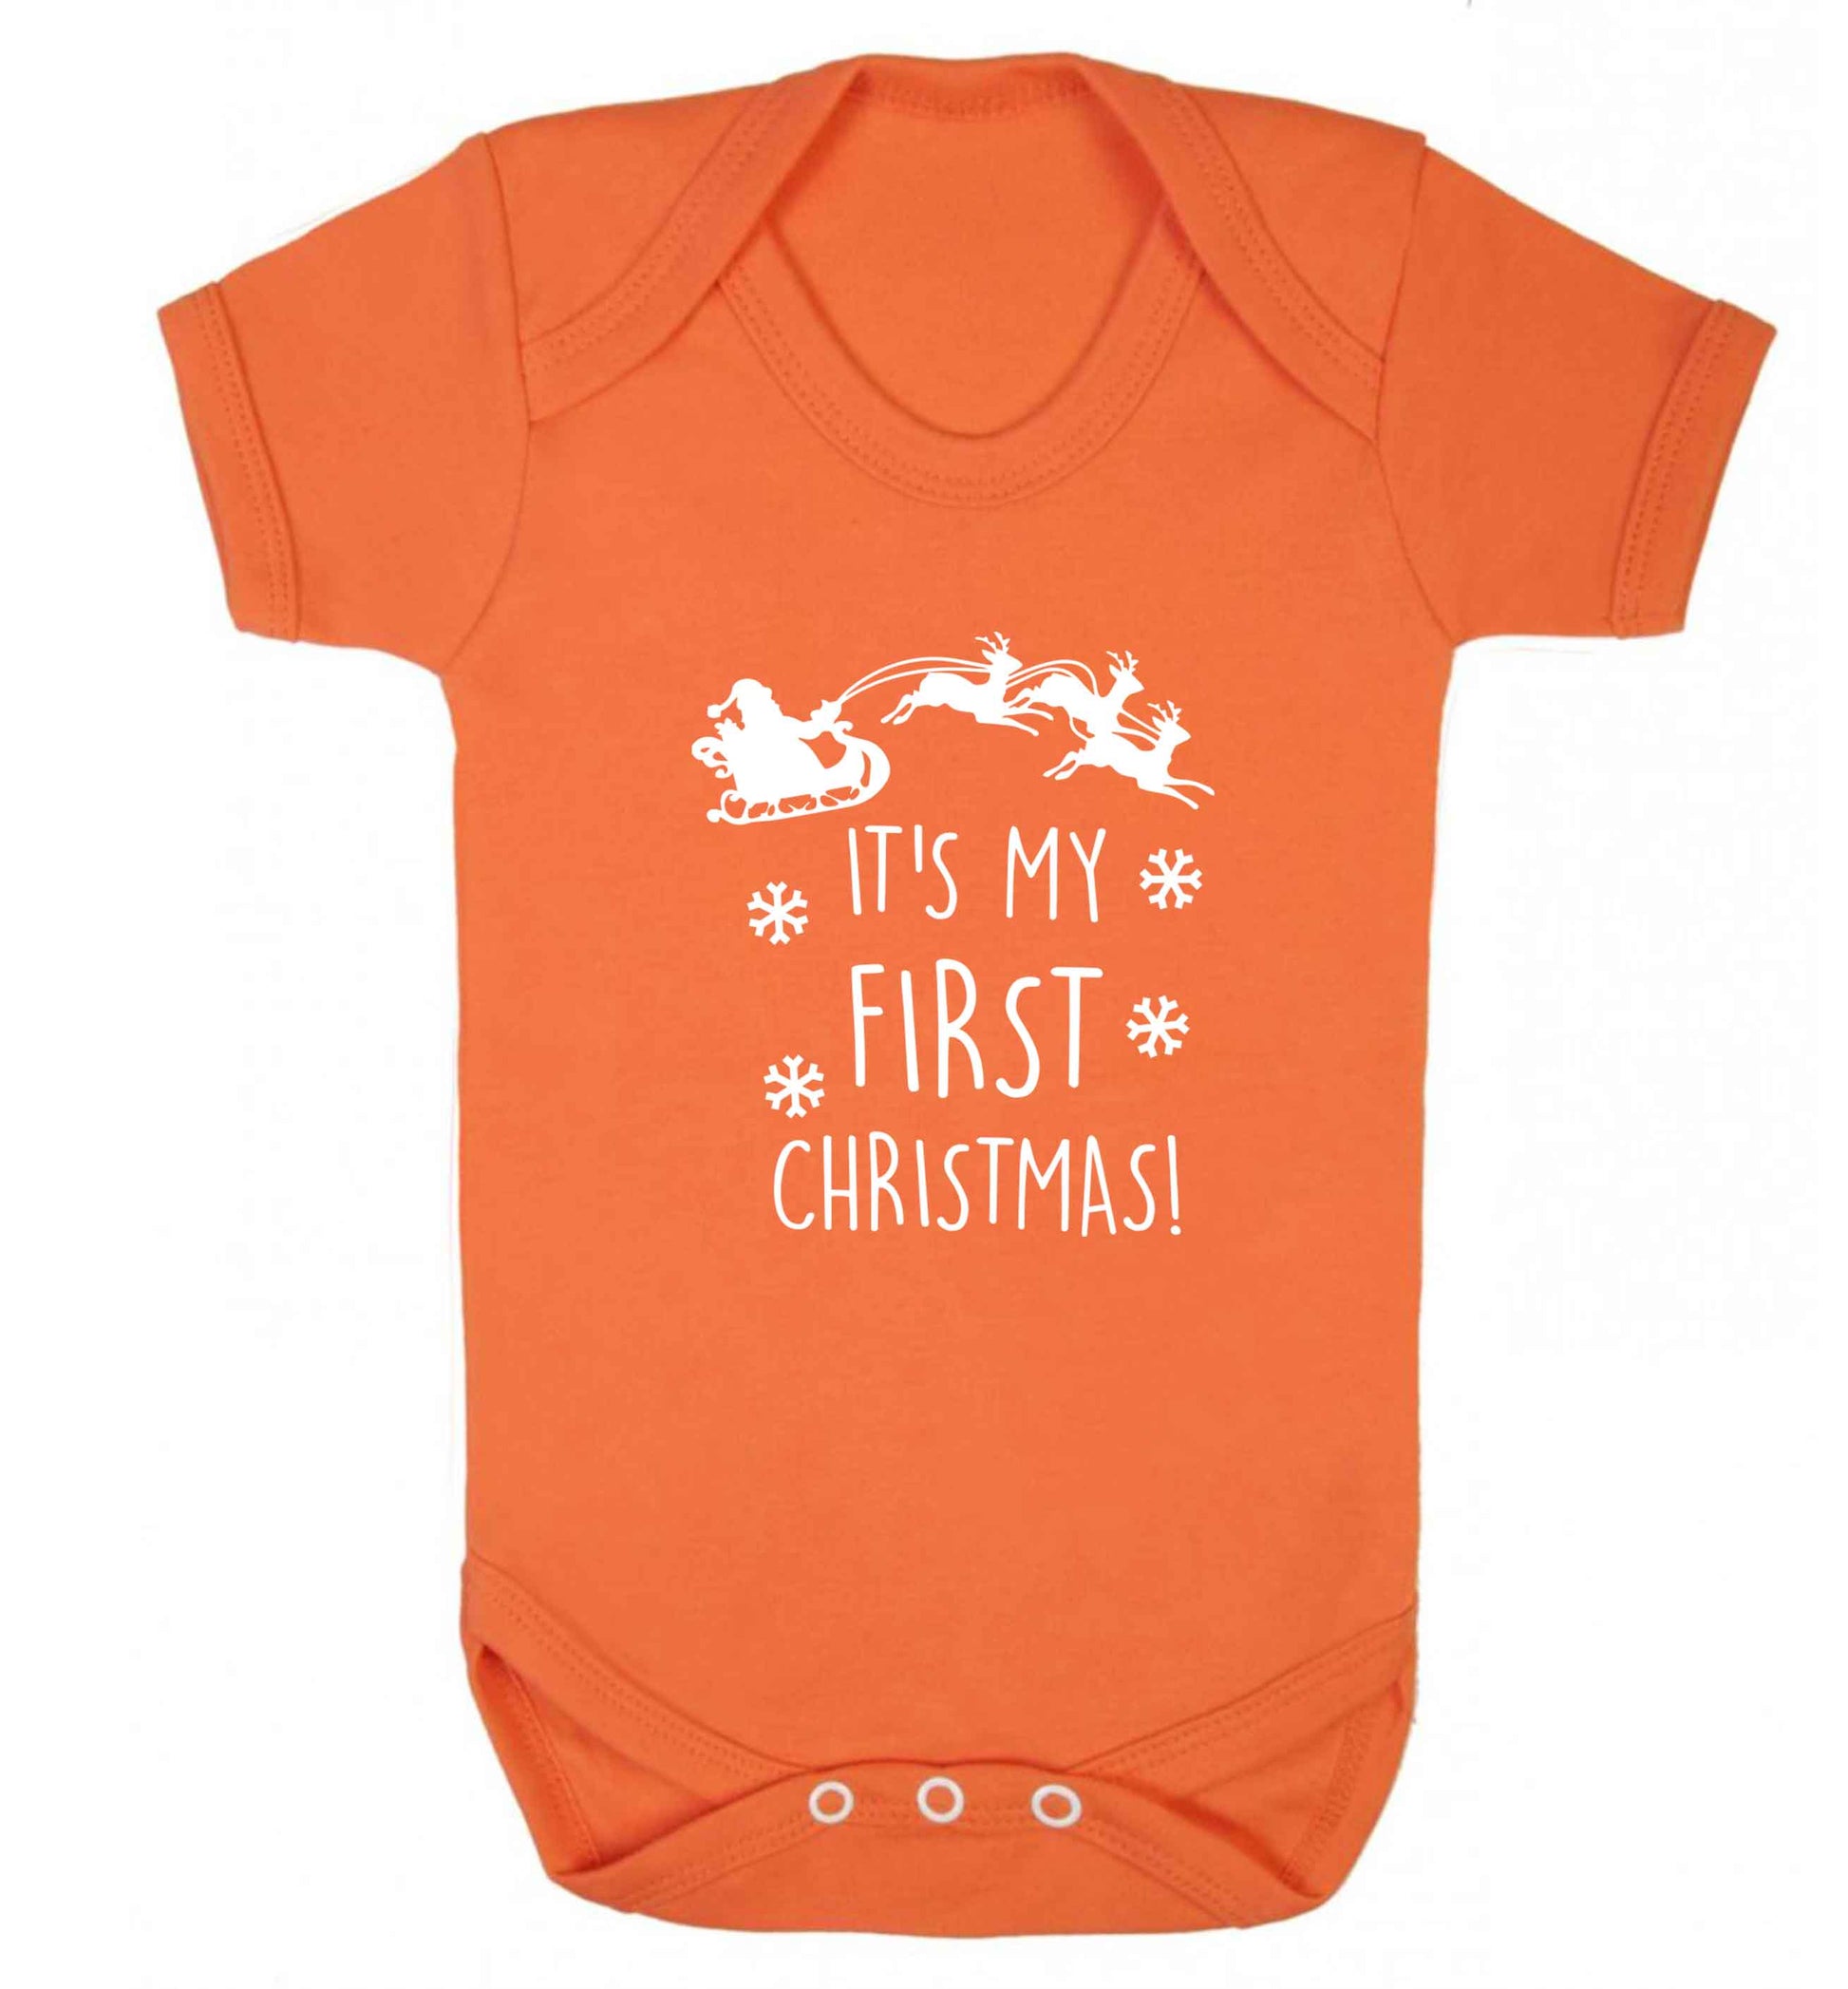 It's my first Christmas - Santa sleigh text baby vest orange 18-24 months